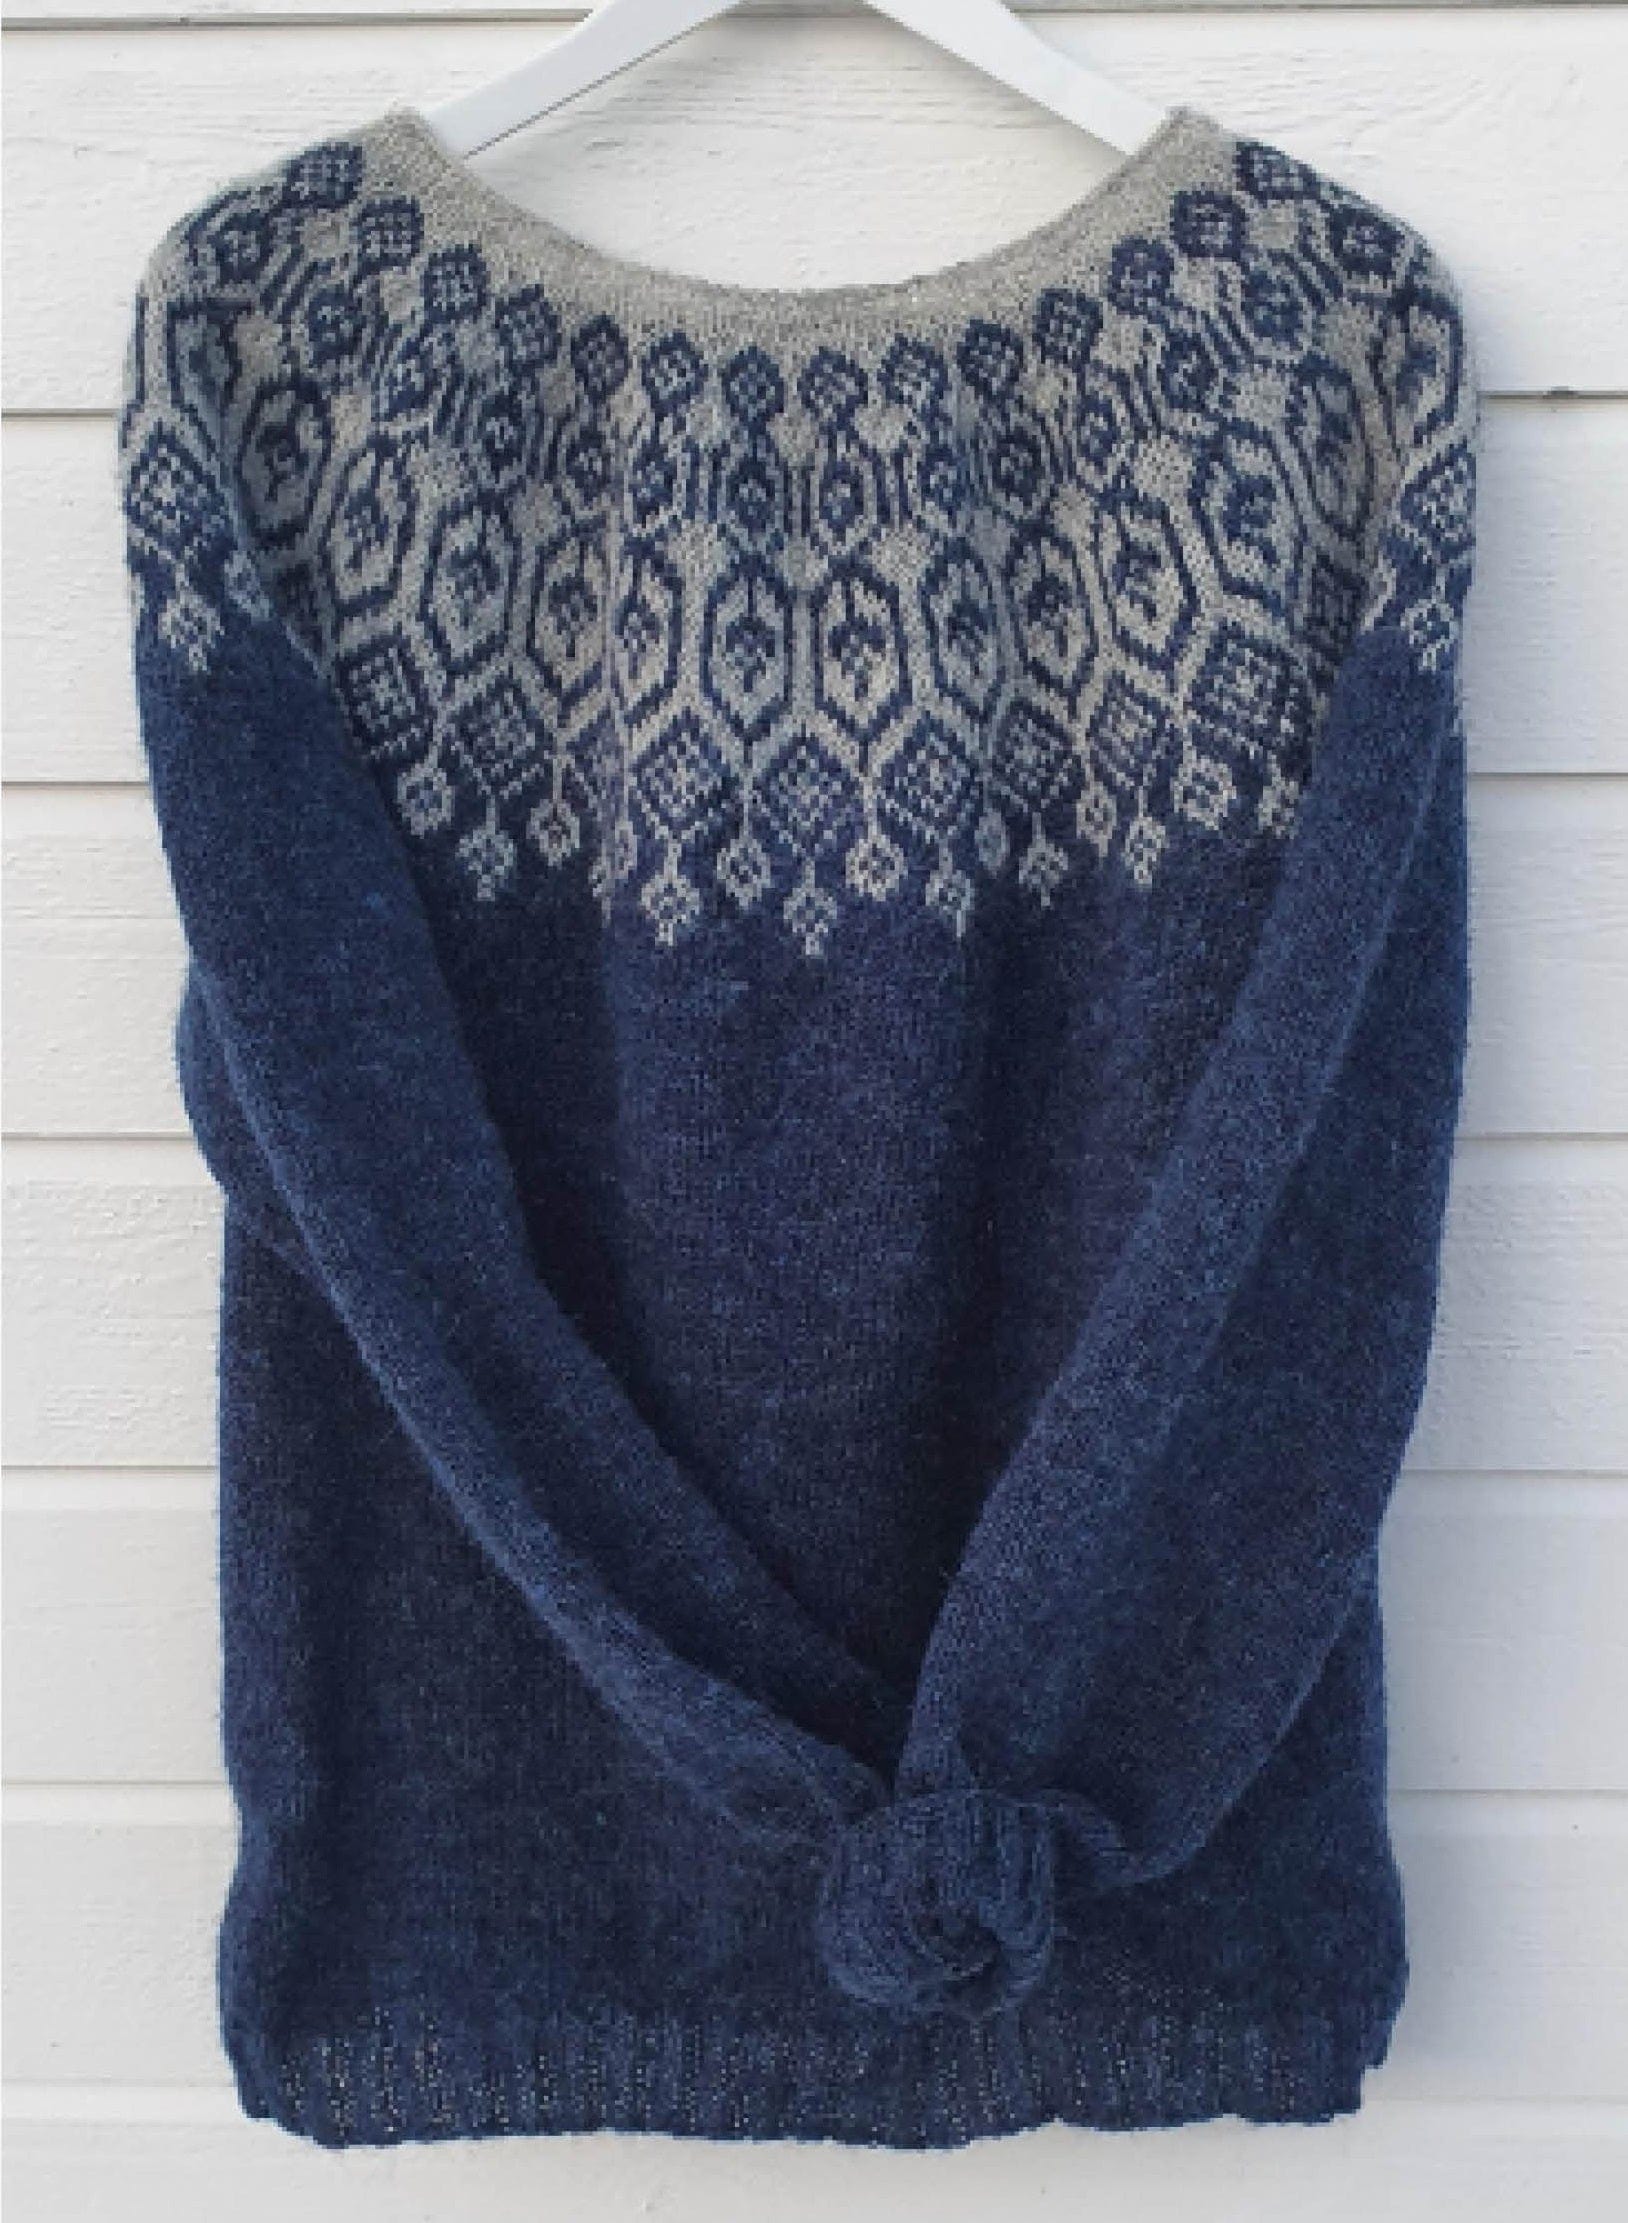 Elina - Winter Blue Sweater Knitting Kit - The Icelandic Store